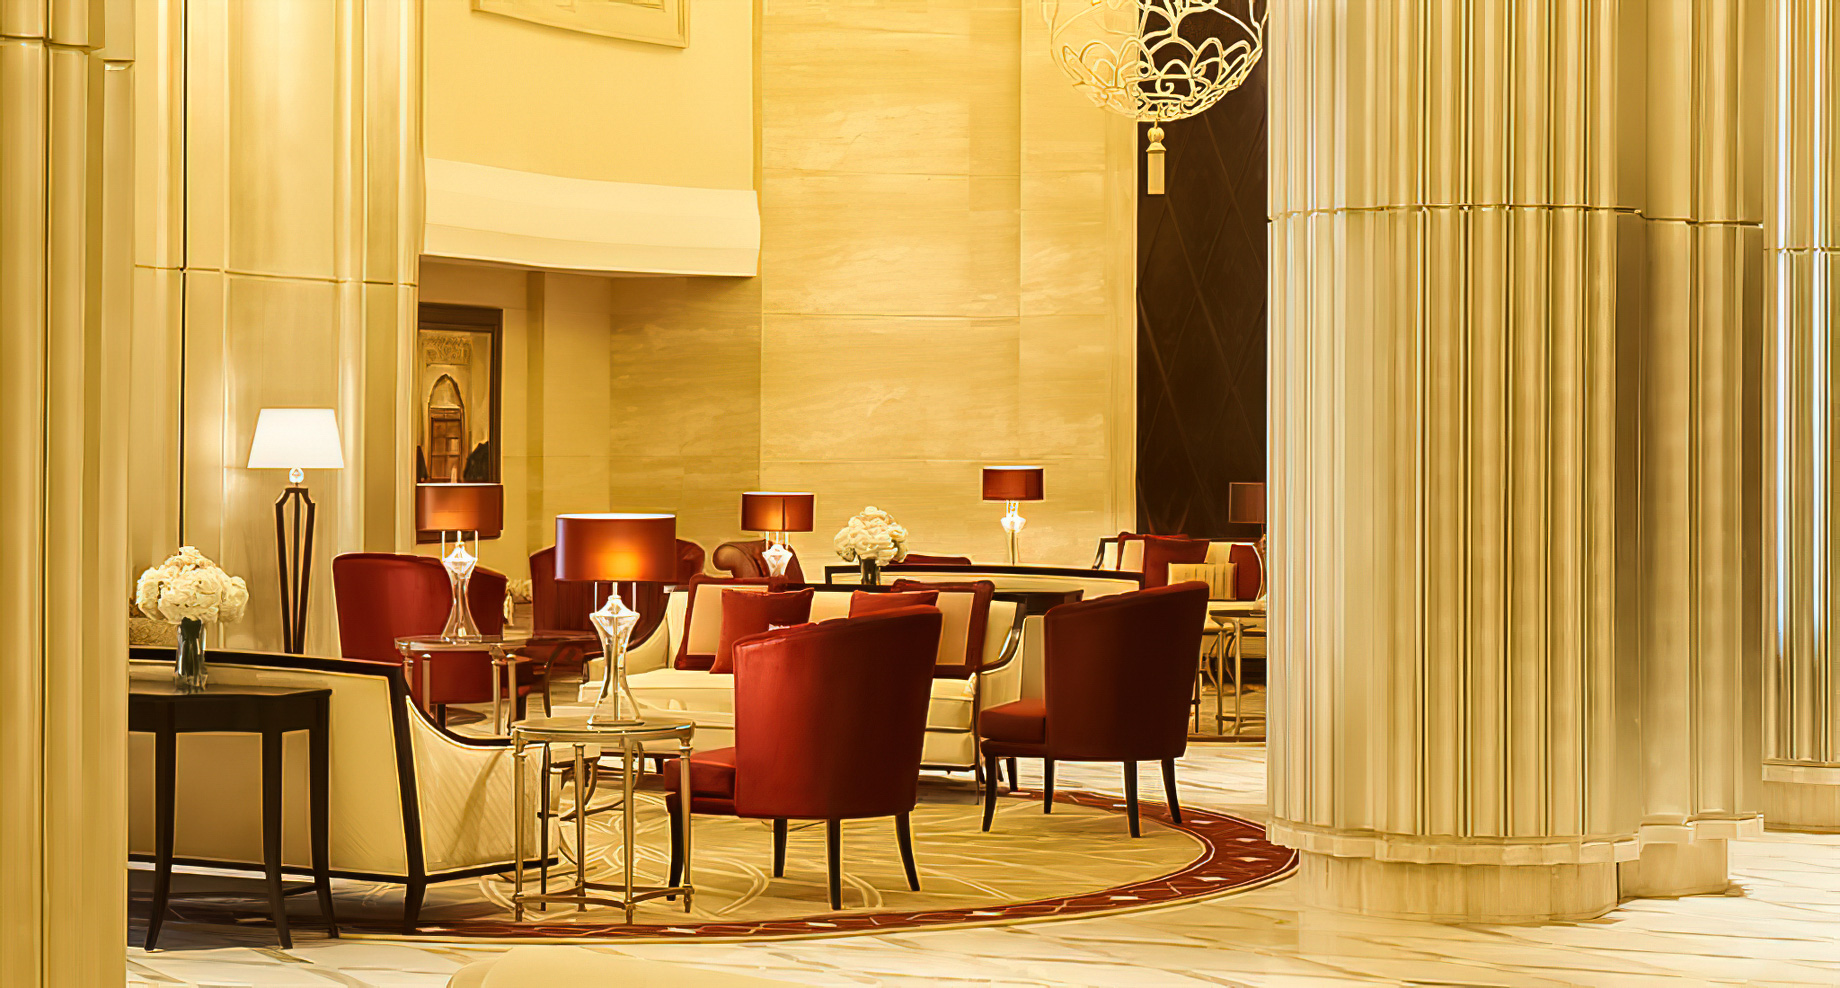 The St. Regis Abu Dhabi Hotel - Abu Dhabi, United Arab Emirates - Lounge